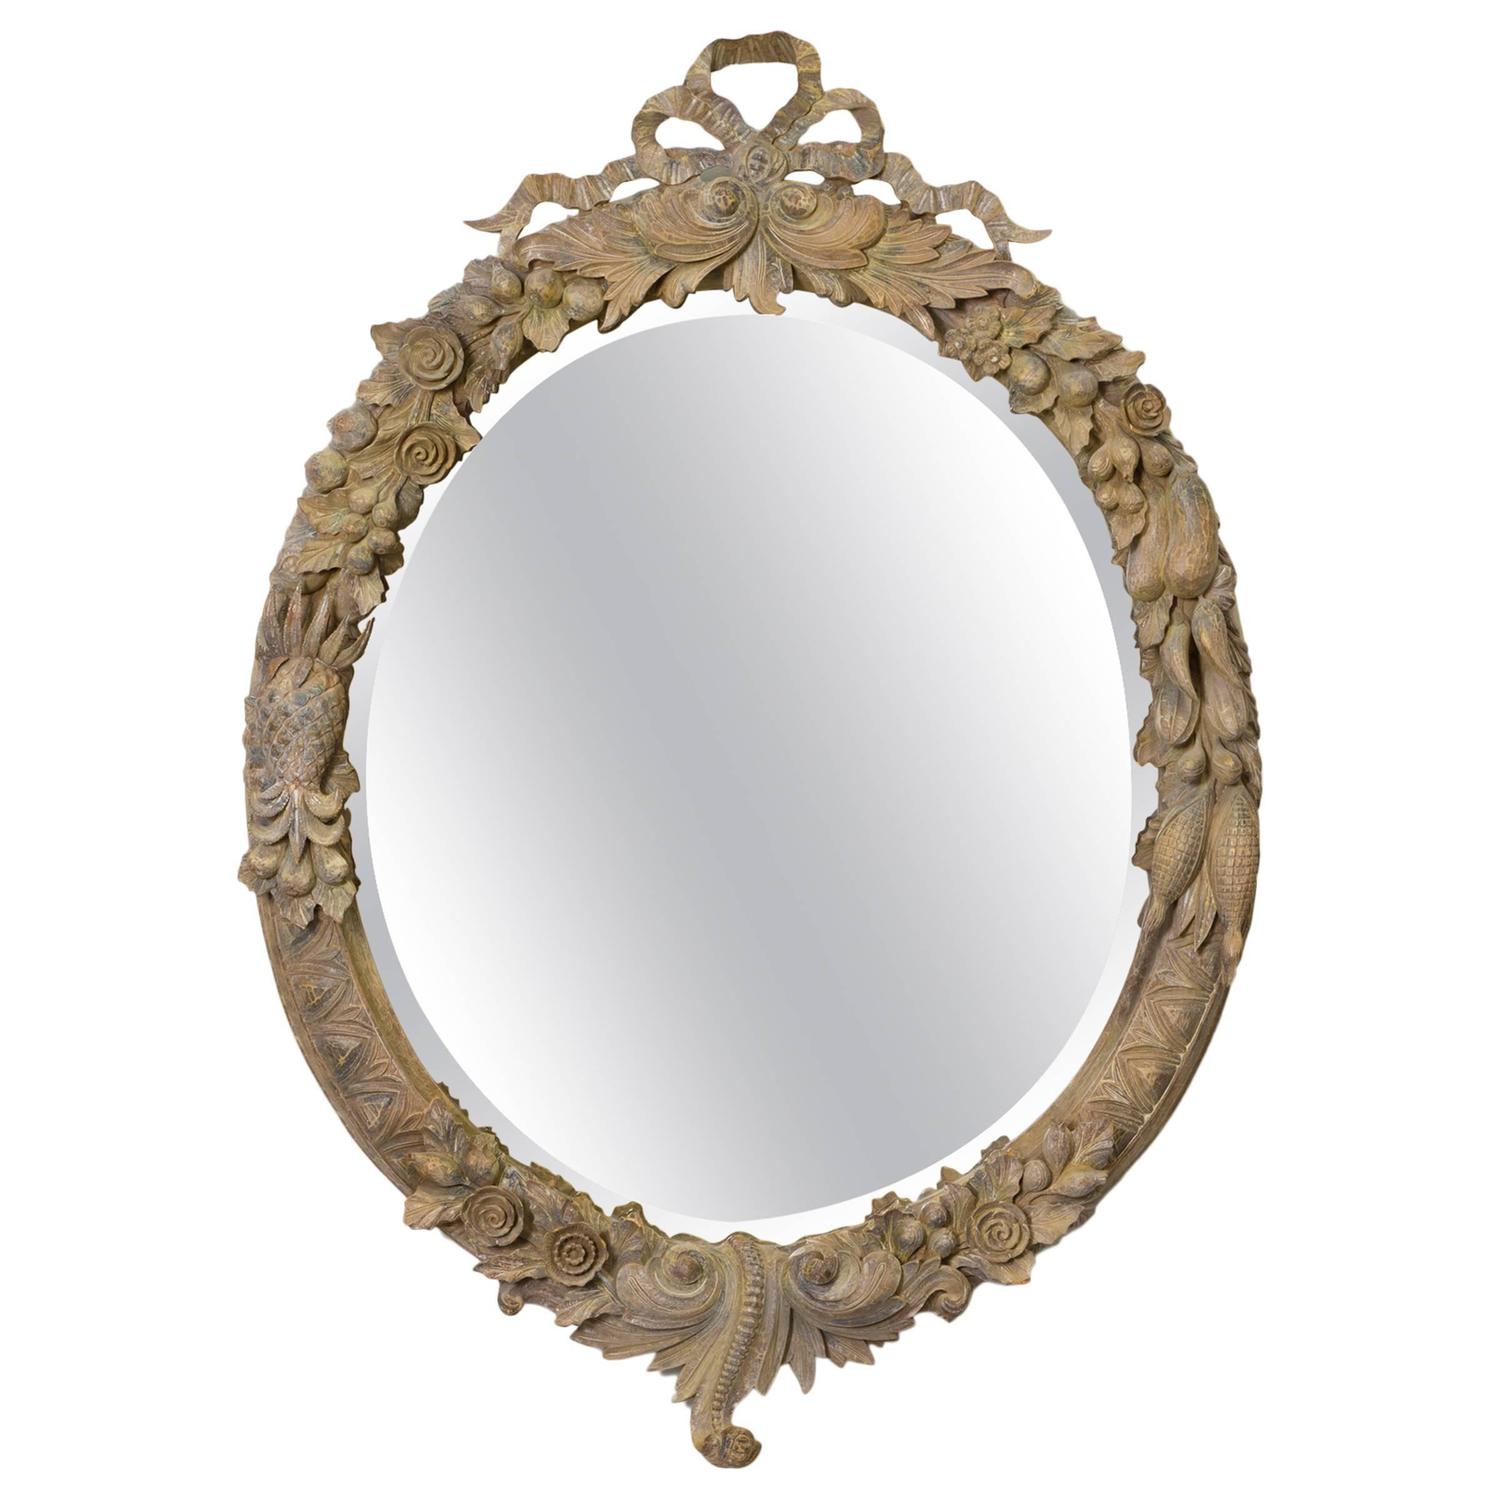 John Richard Carved Wood Mirror For Sale at 1stdibs